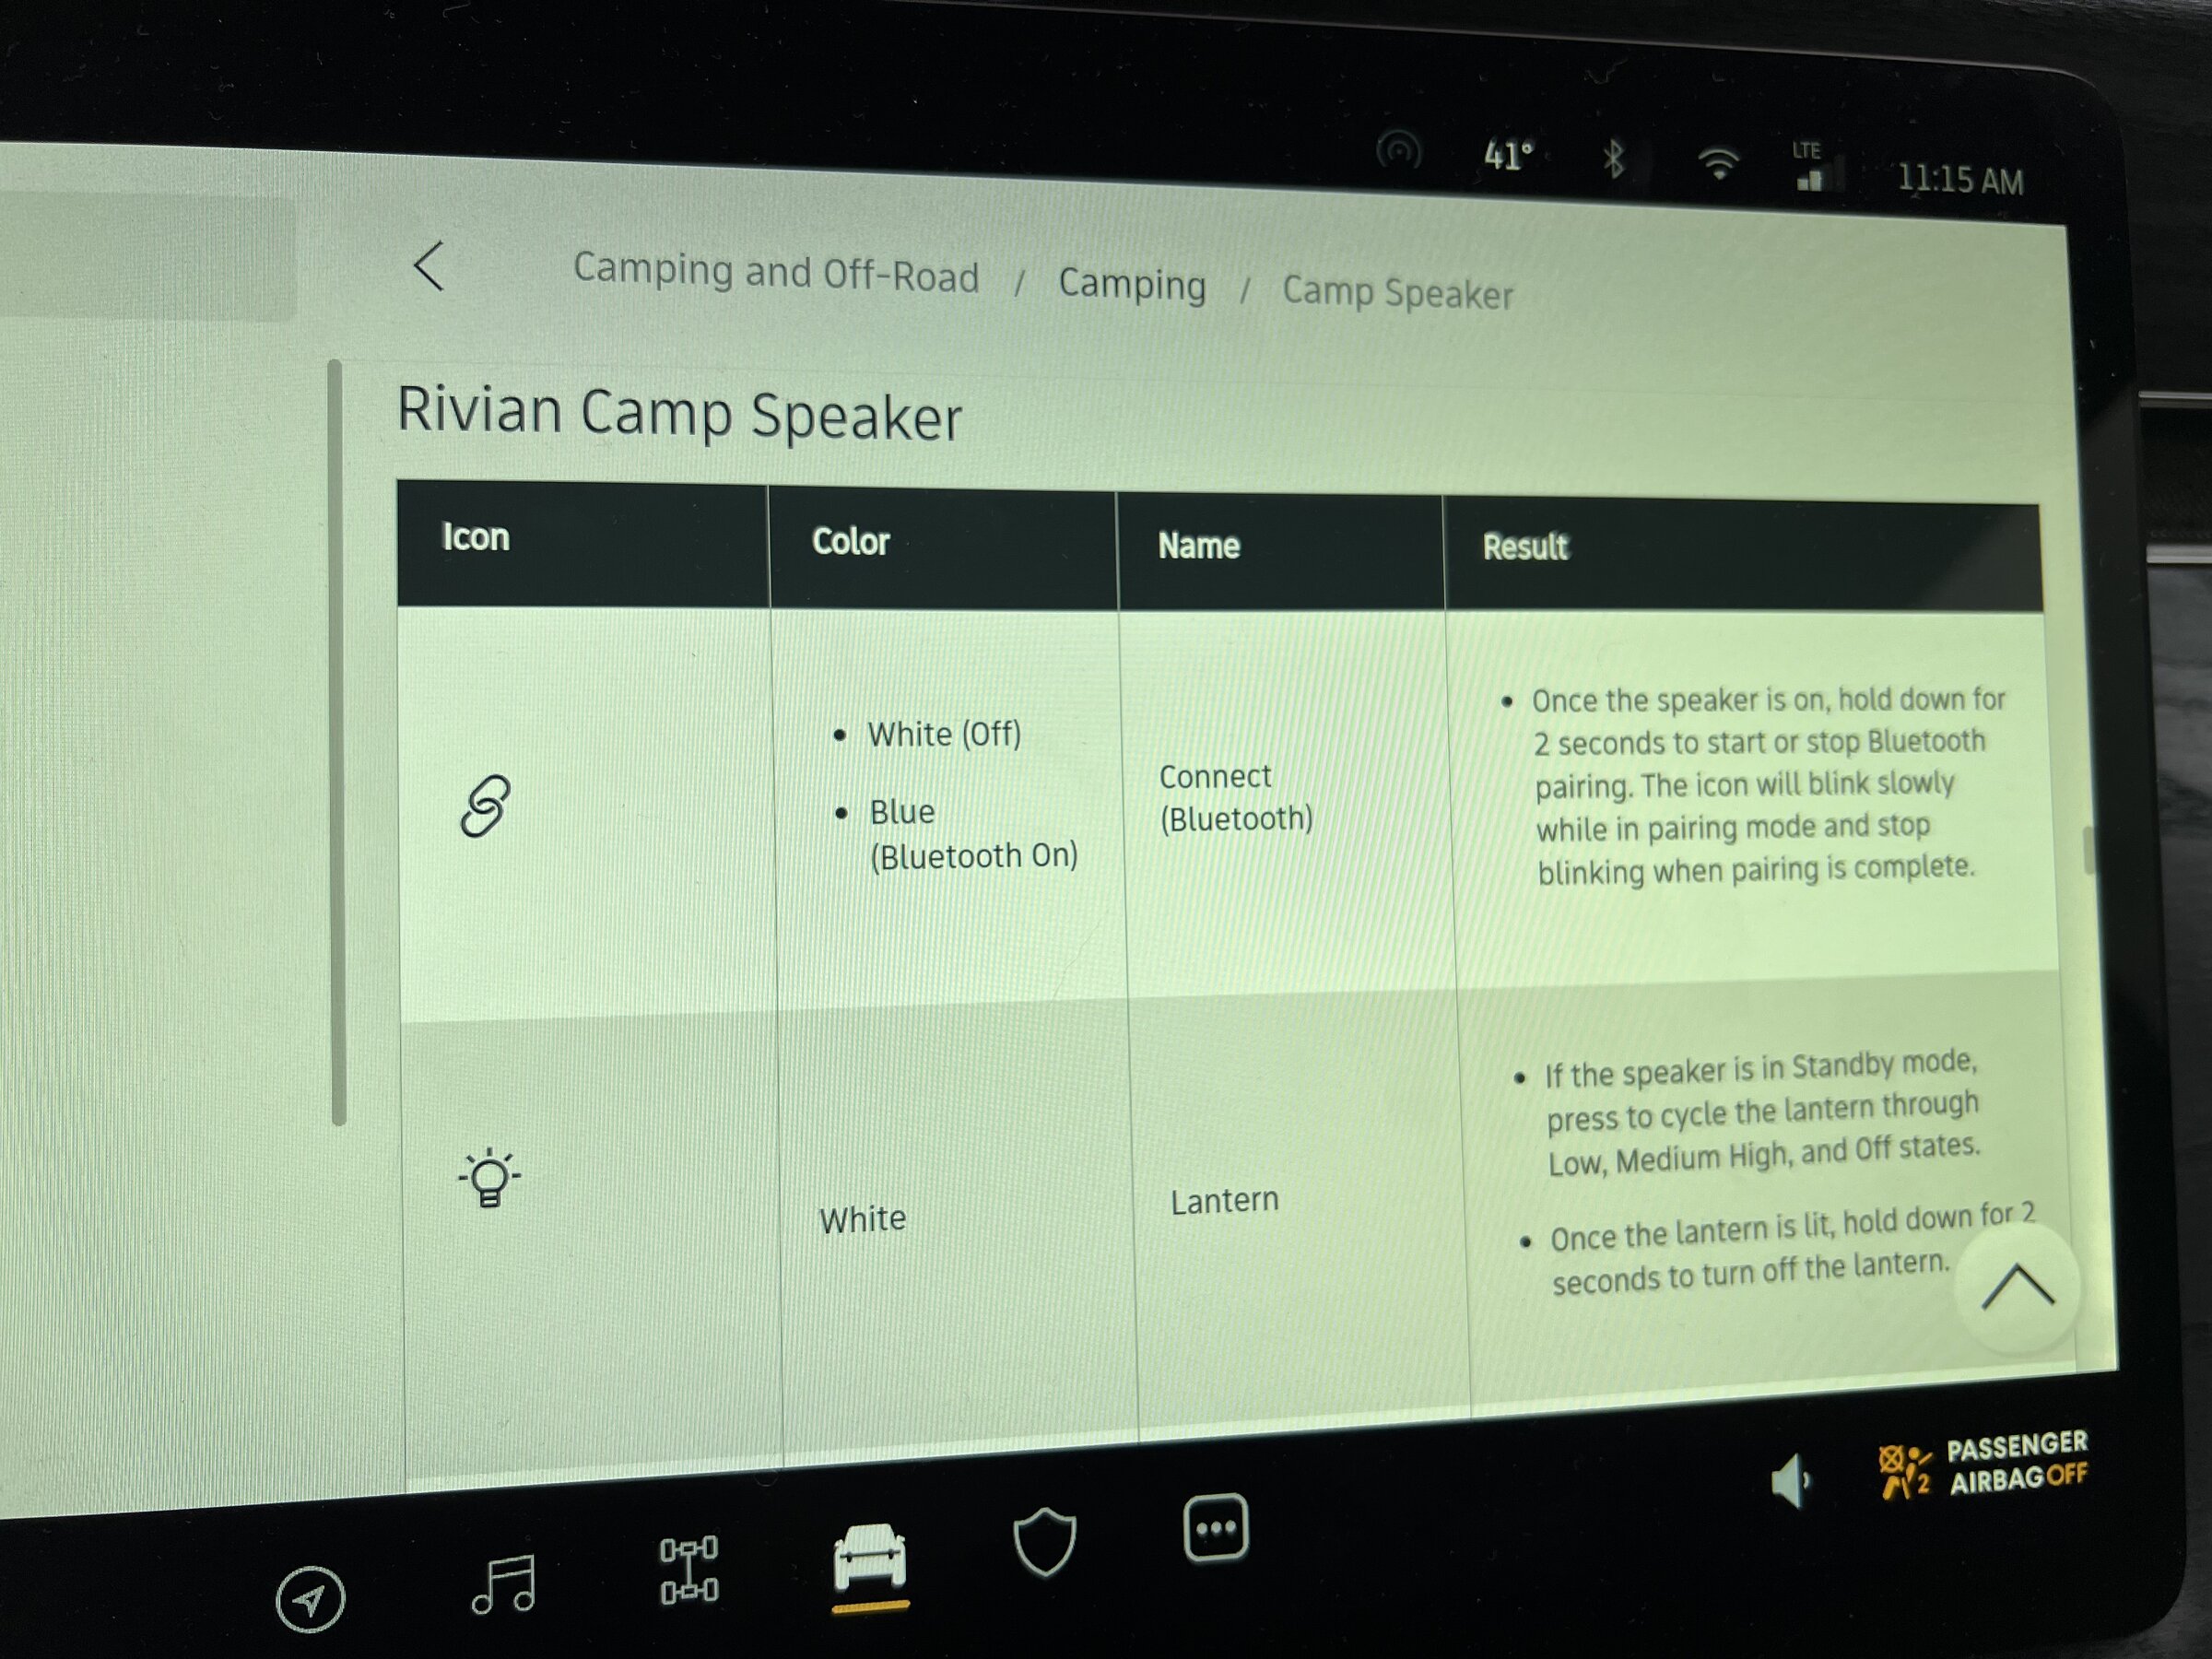 Rivian R1T R1S Rivian Camp Speaker menus / operation details 37E41CA6-2812-4EDB-AECC-5010434C9B89